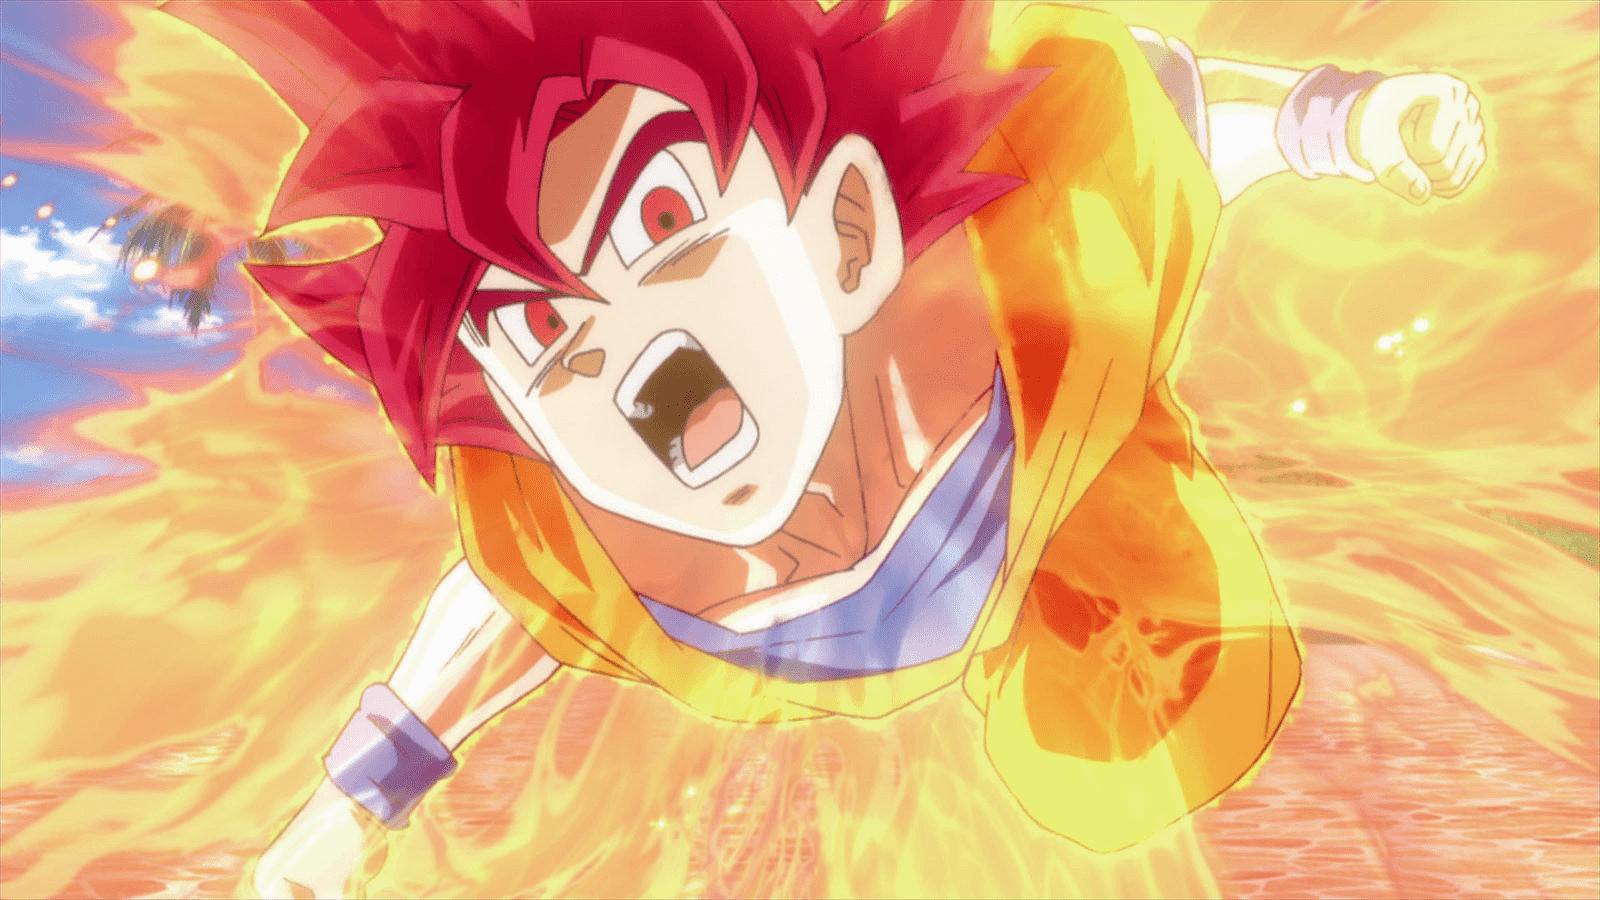 Goku image *Goku Super Saiyan God* HD wallpaper and background